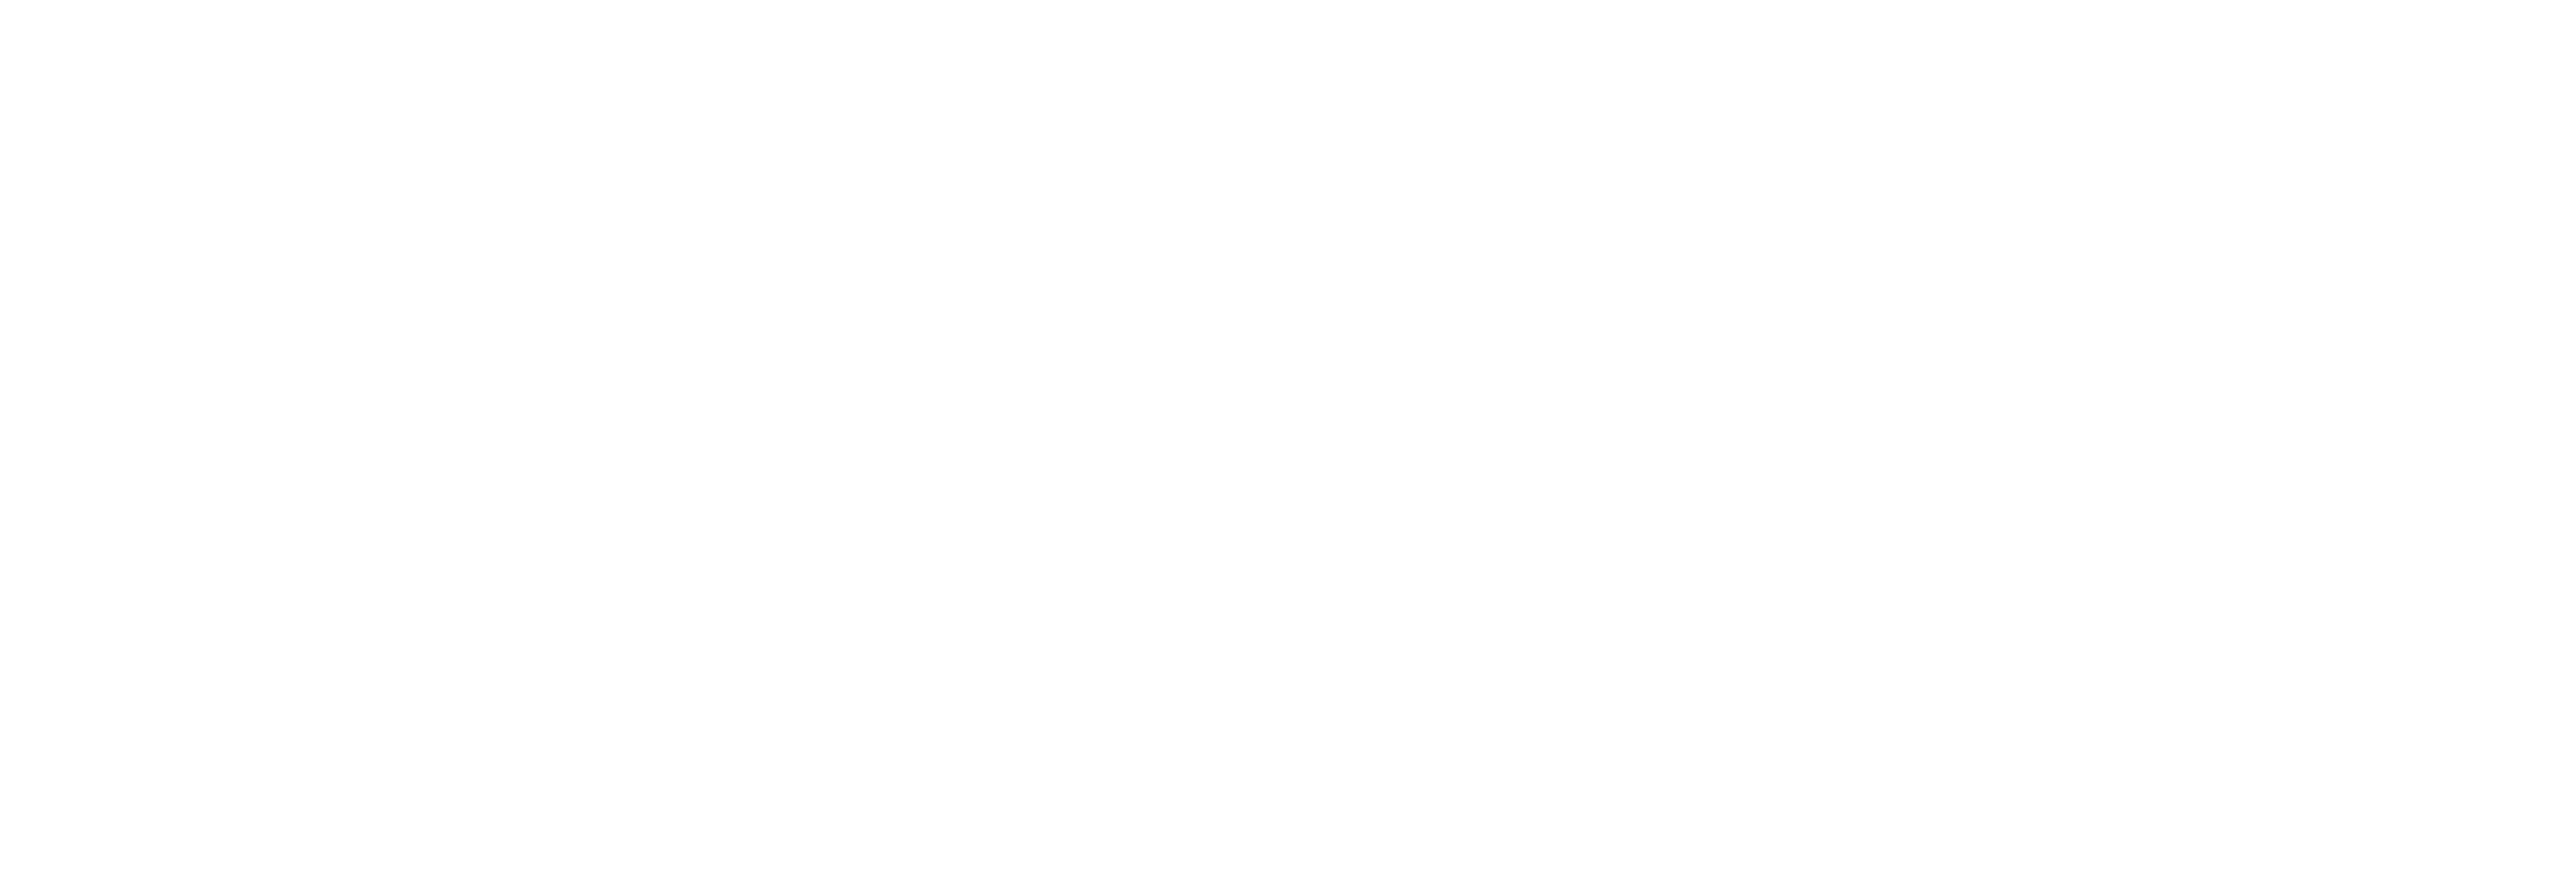 AniCura Alhaurín El Grande Clínica Veterinaria logo